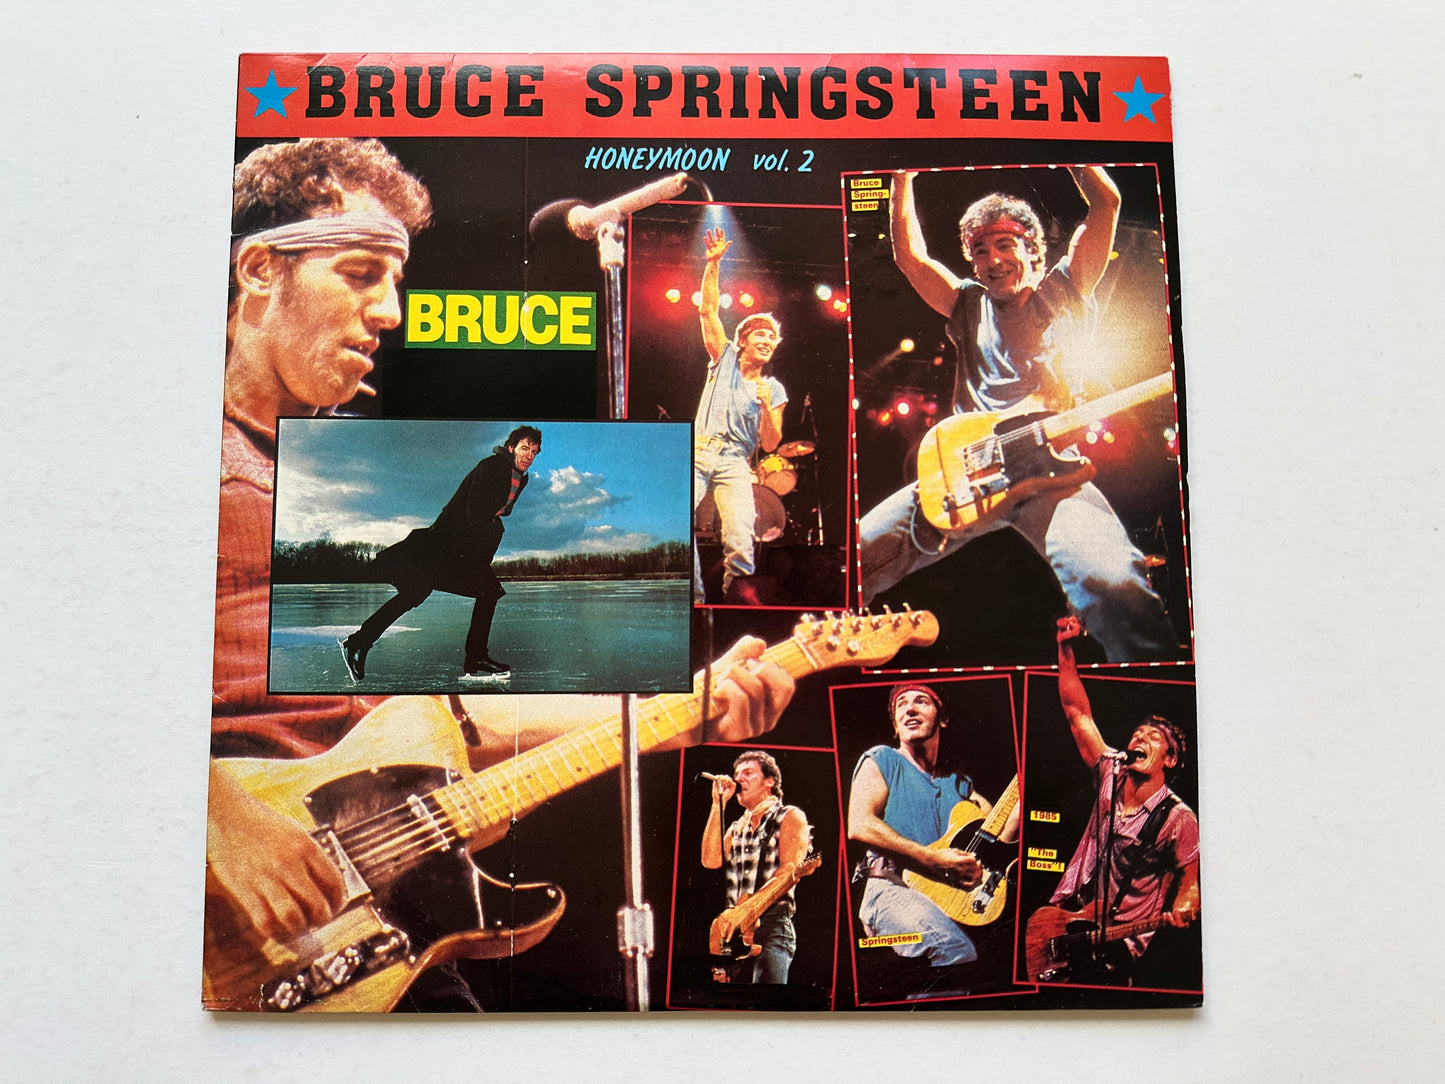 Bruce Springsteen – Honeymoon Vol. 2